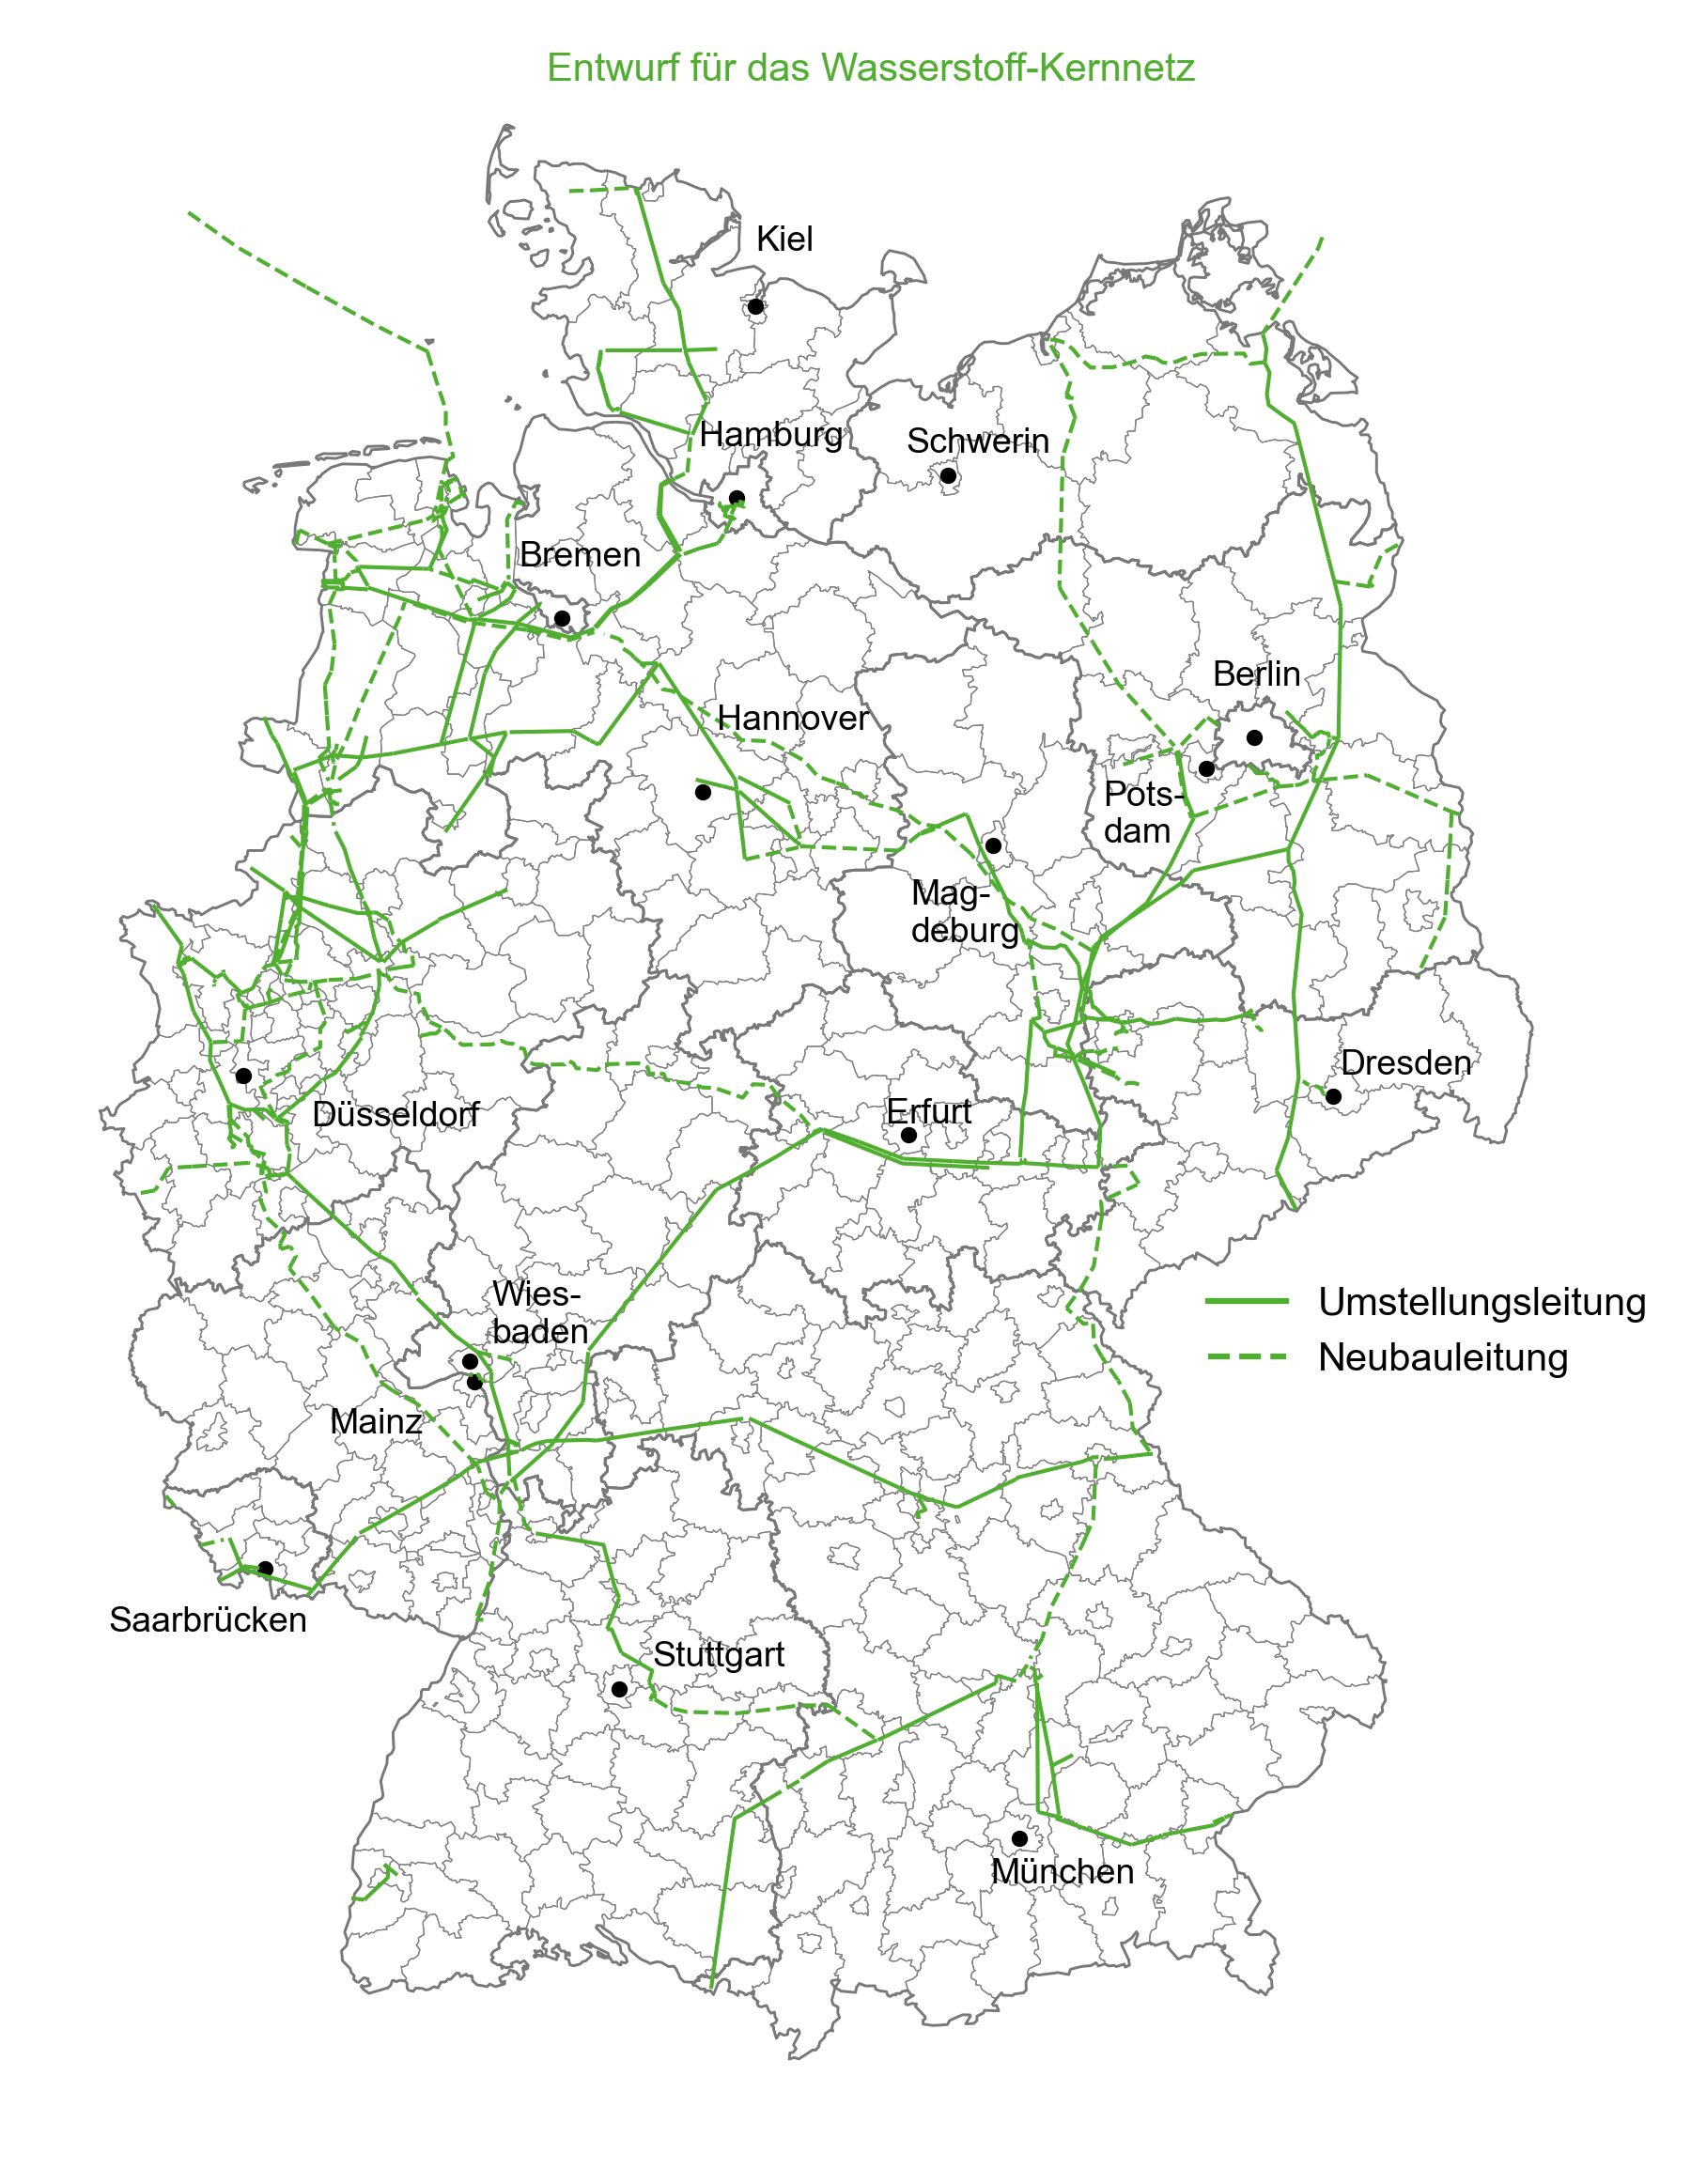 The planned German hydrogen core network 2032 by FNB Gas